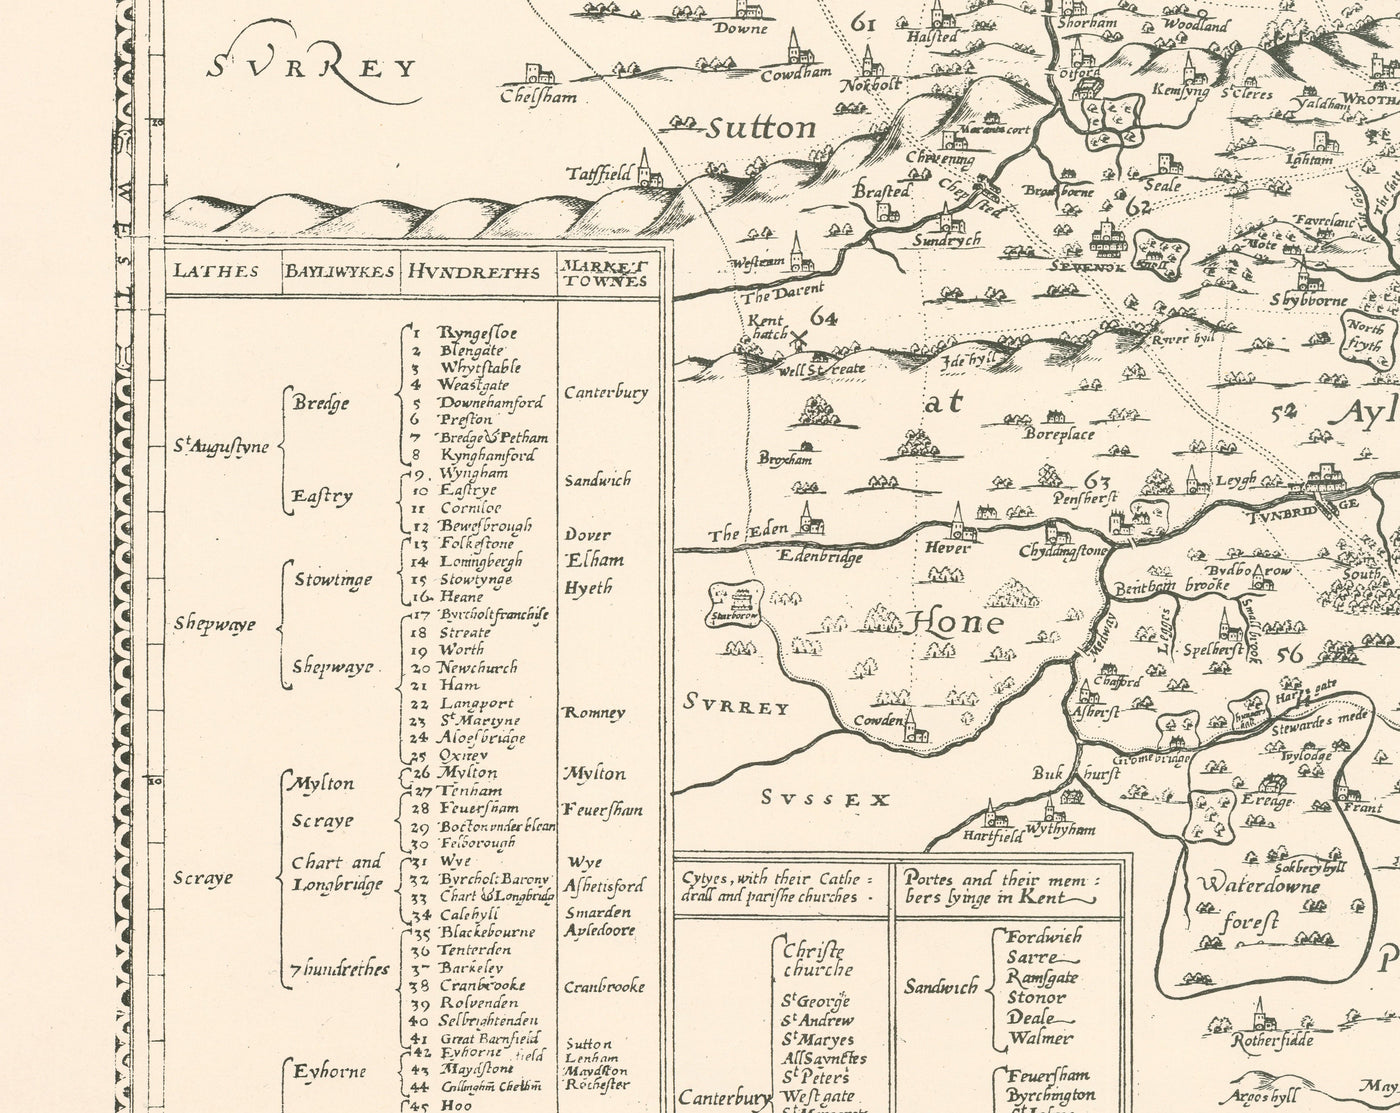 Old map of Kent in 1596 by Philip Symonson - Dartford, Maidstone, Bromley, Tunbridge, Gillingham, Chatham